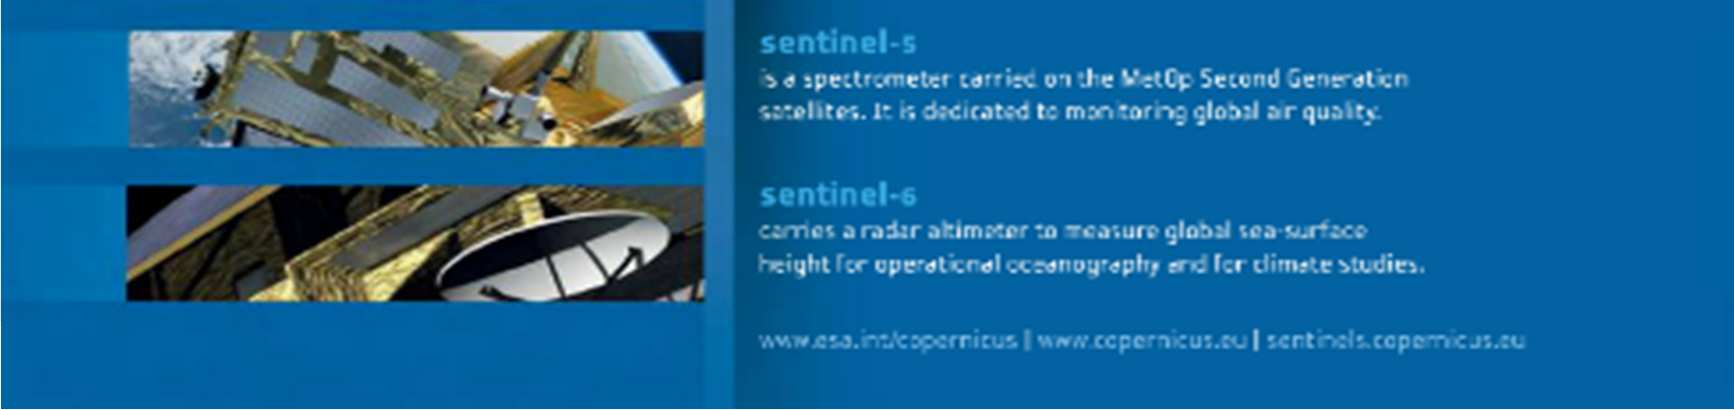 Series of Sentinel satellites Source: